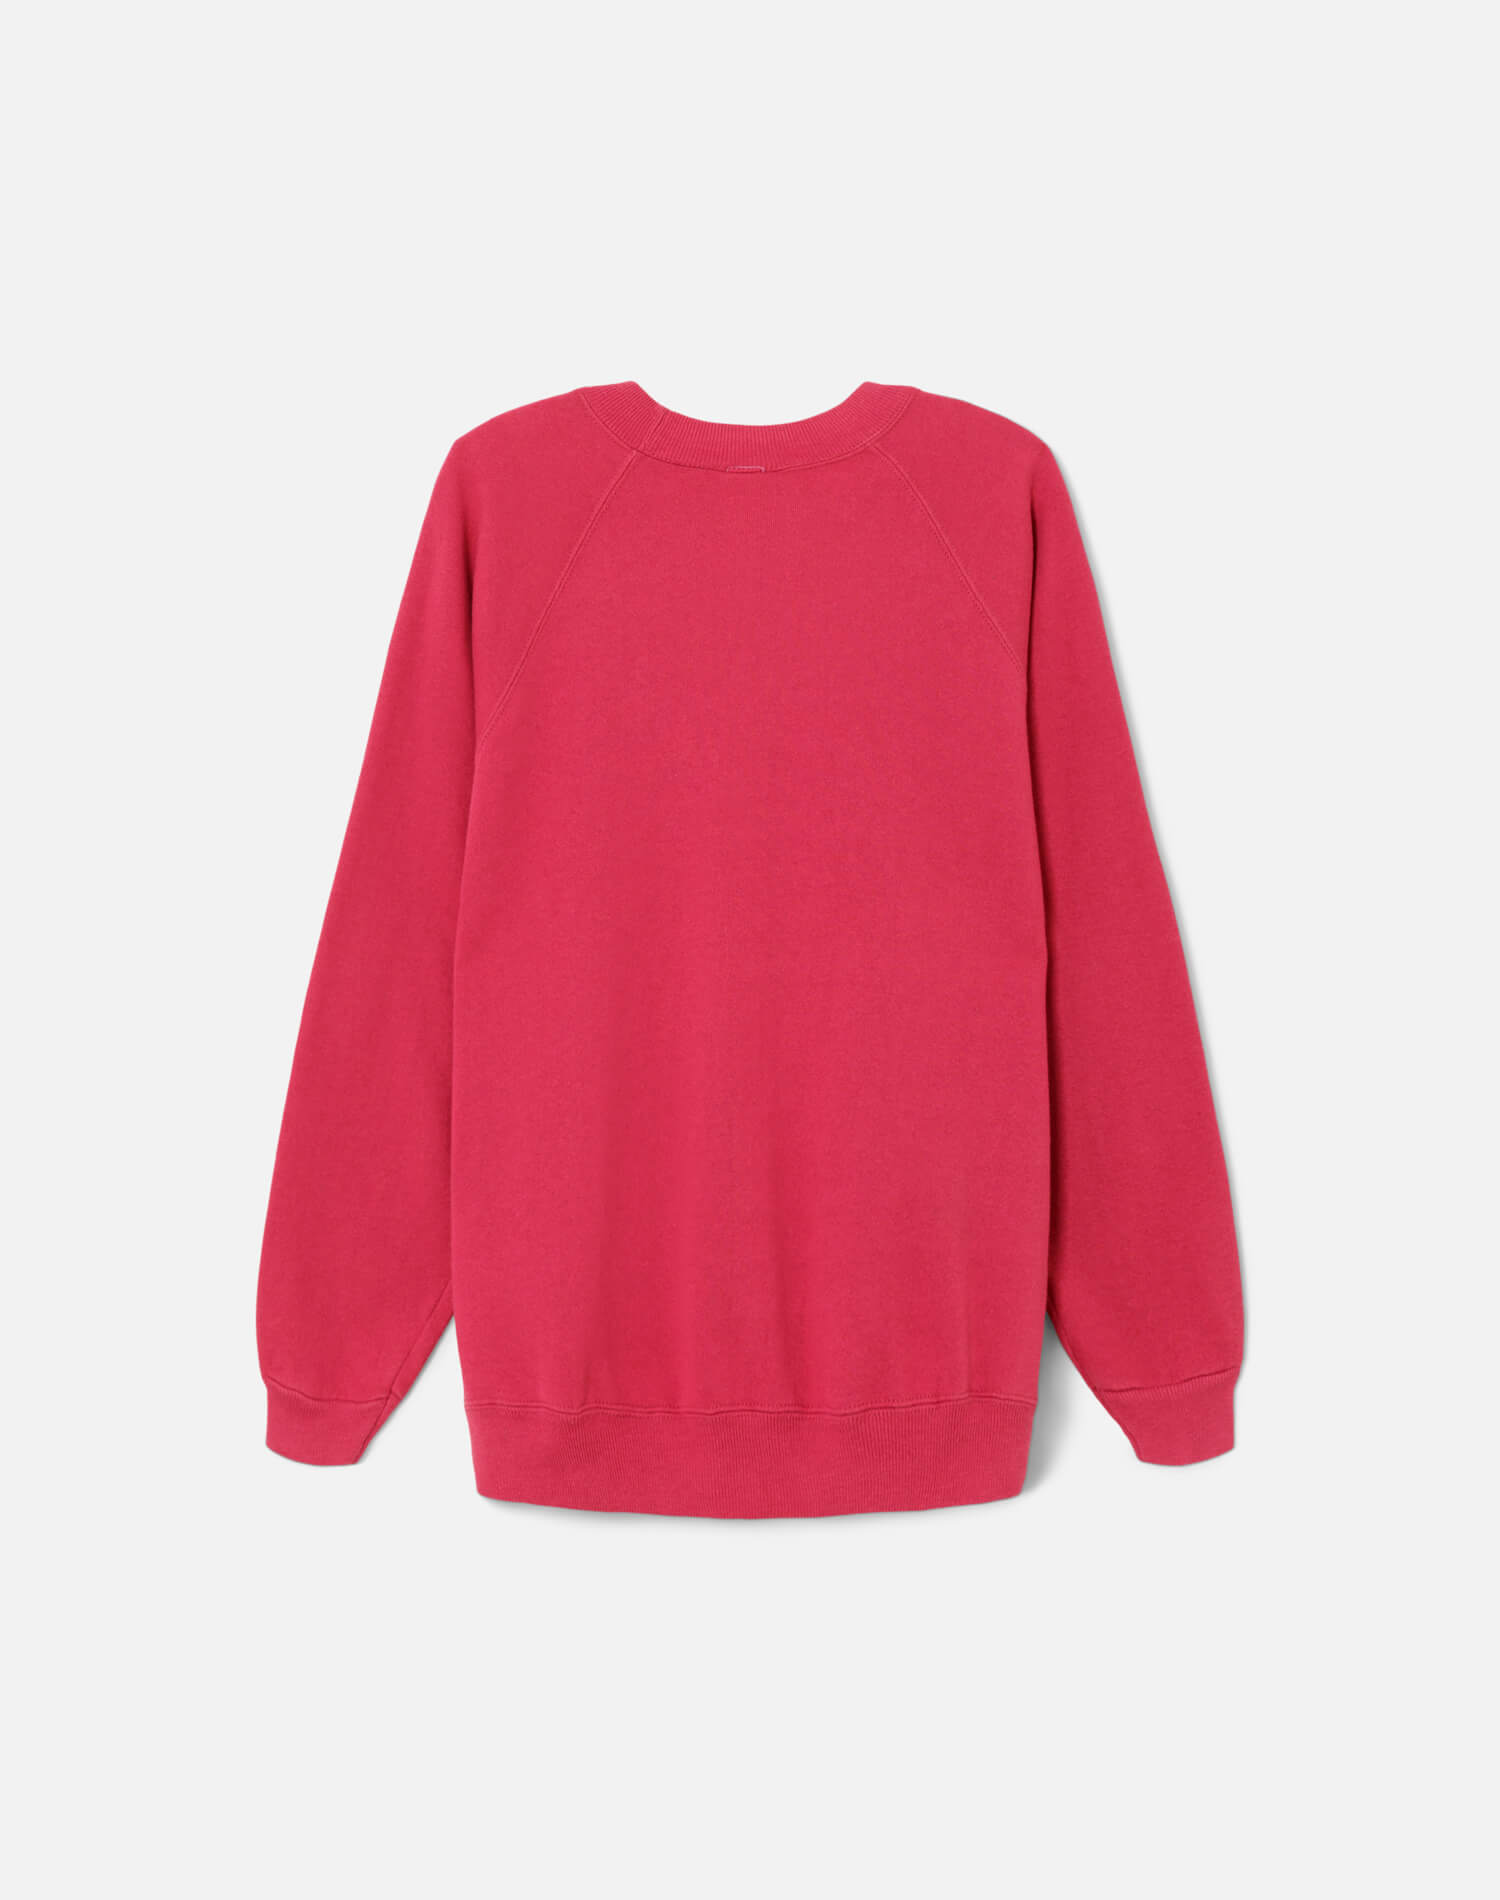 Upcycled "Playtime" Sweatshirt - Hot Pink